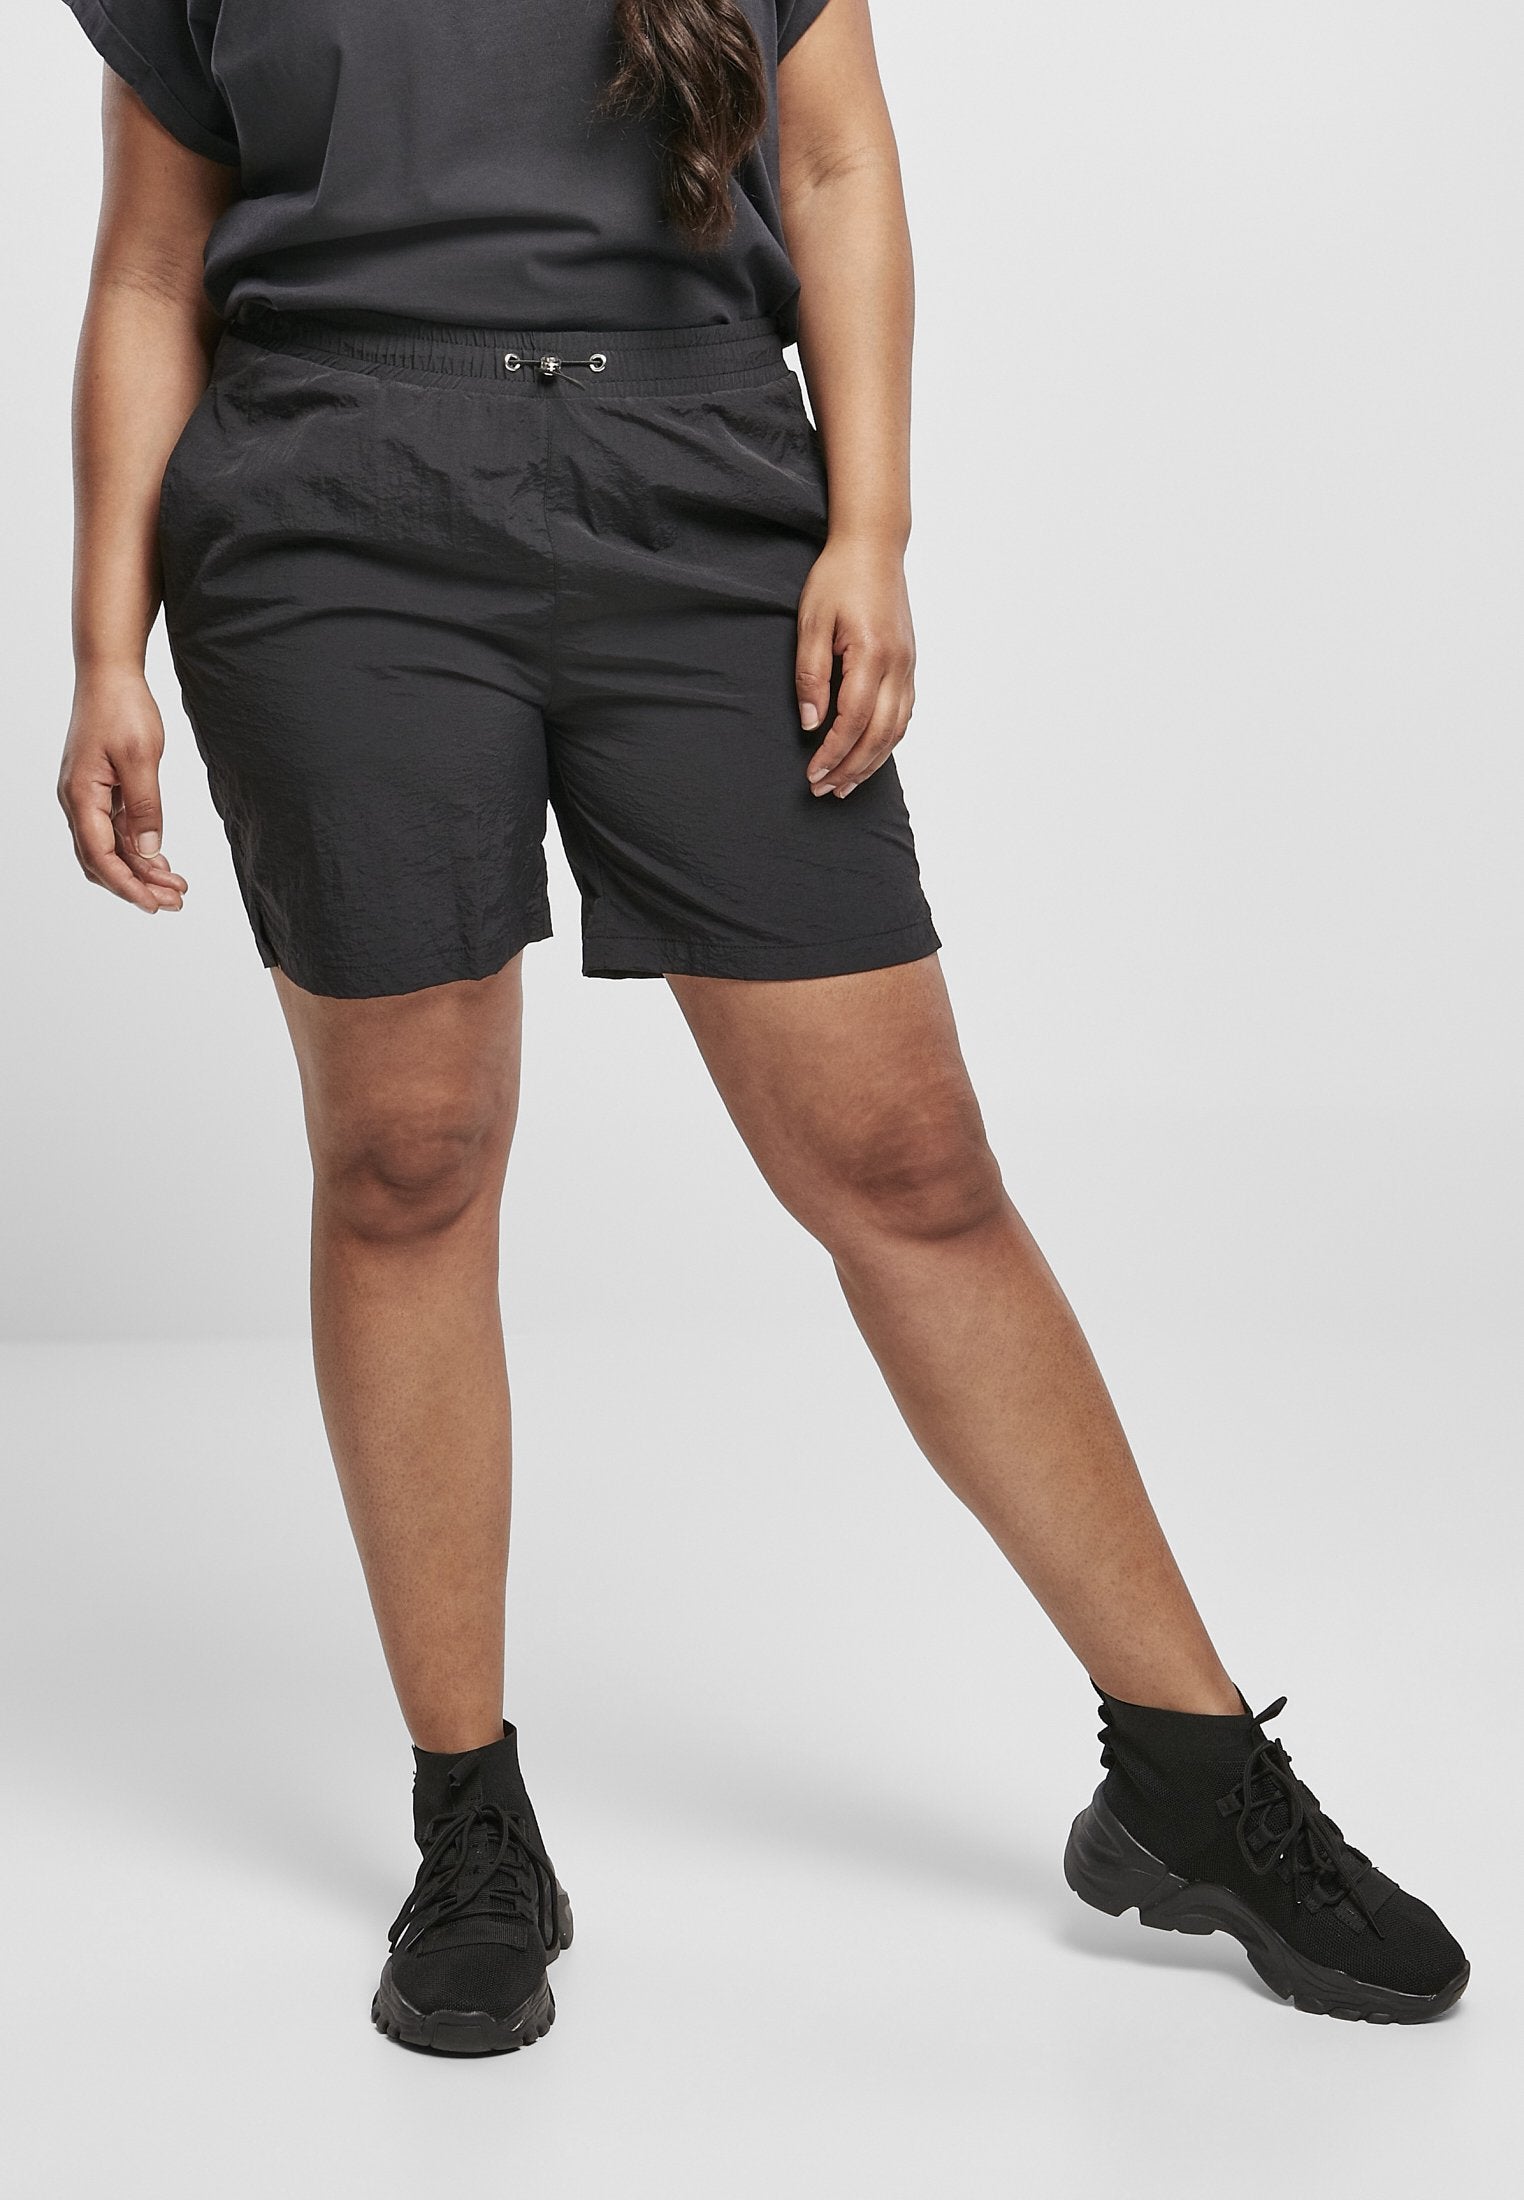 Urban Classics Damen Crinkle Nylon Shorts in Schwarz-Street-& Sportswear Aurich - Shorts